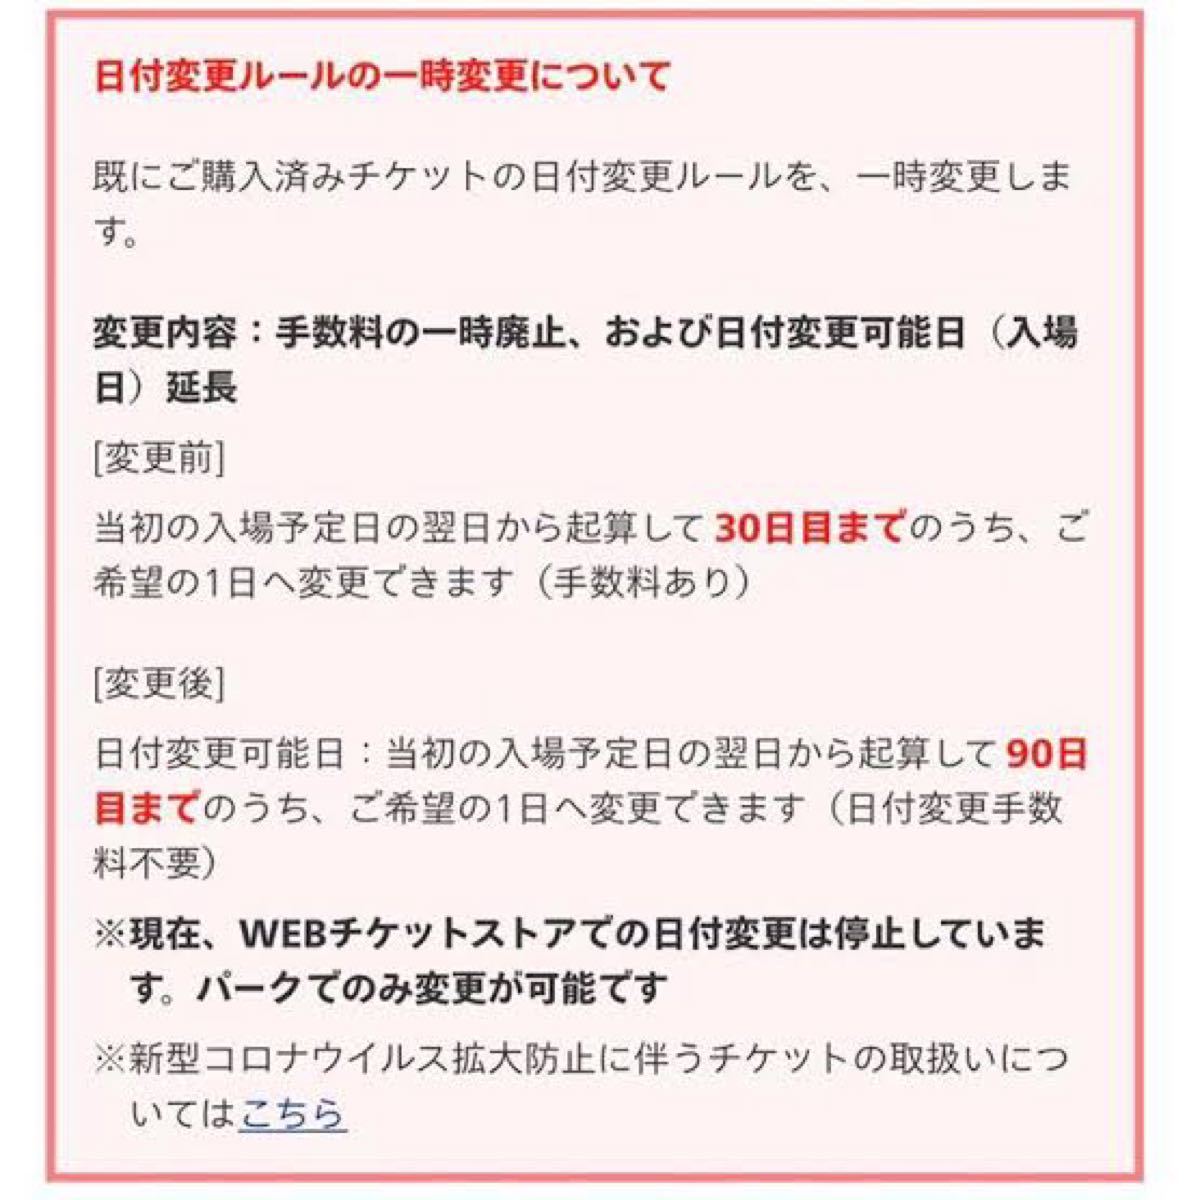 OSM様1枚目】ユニバーサルスタジオジャパン USJ 1 5デイ 入場チケット